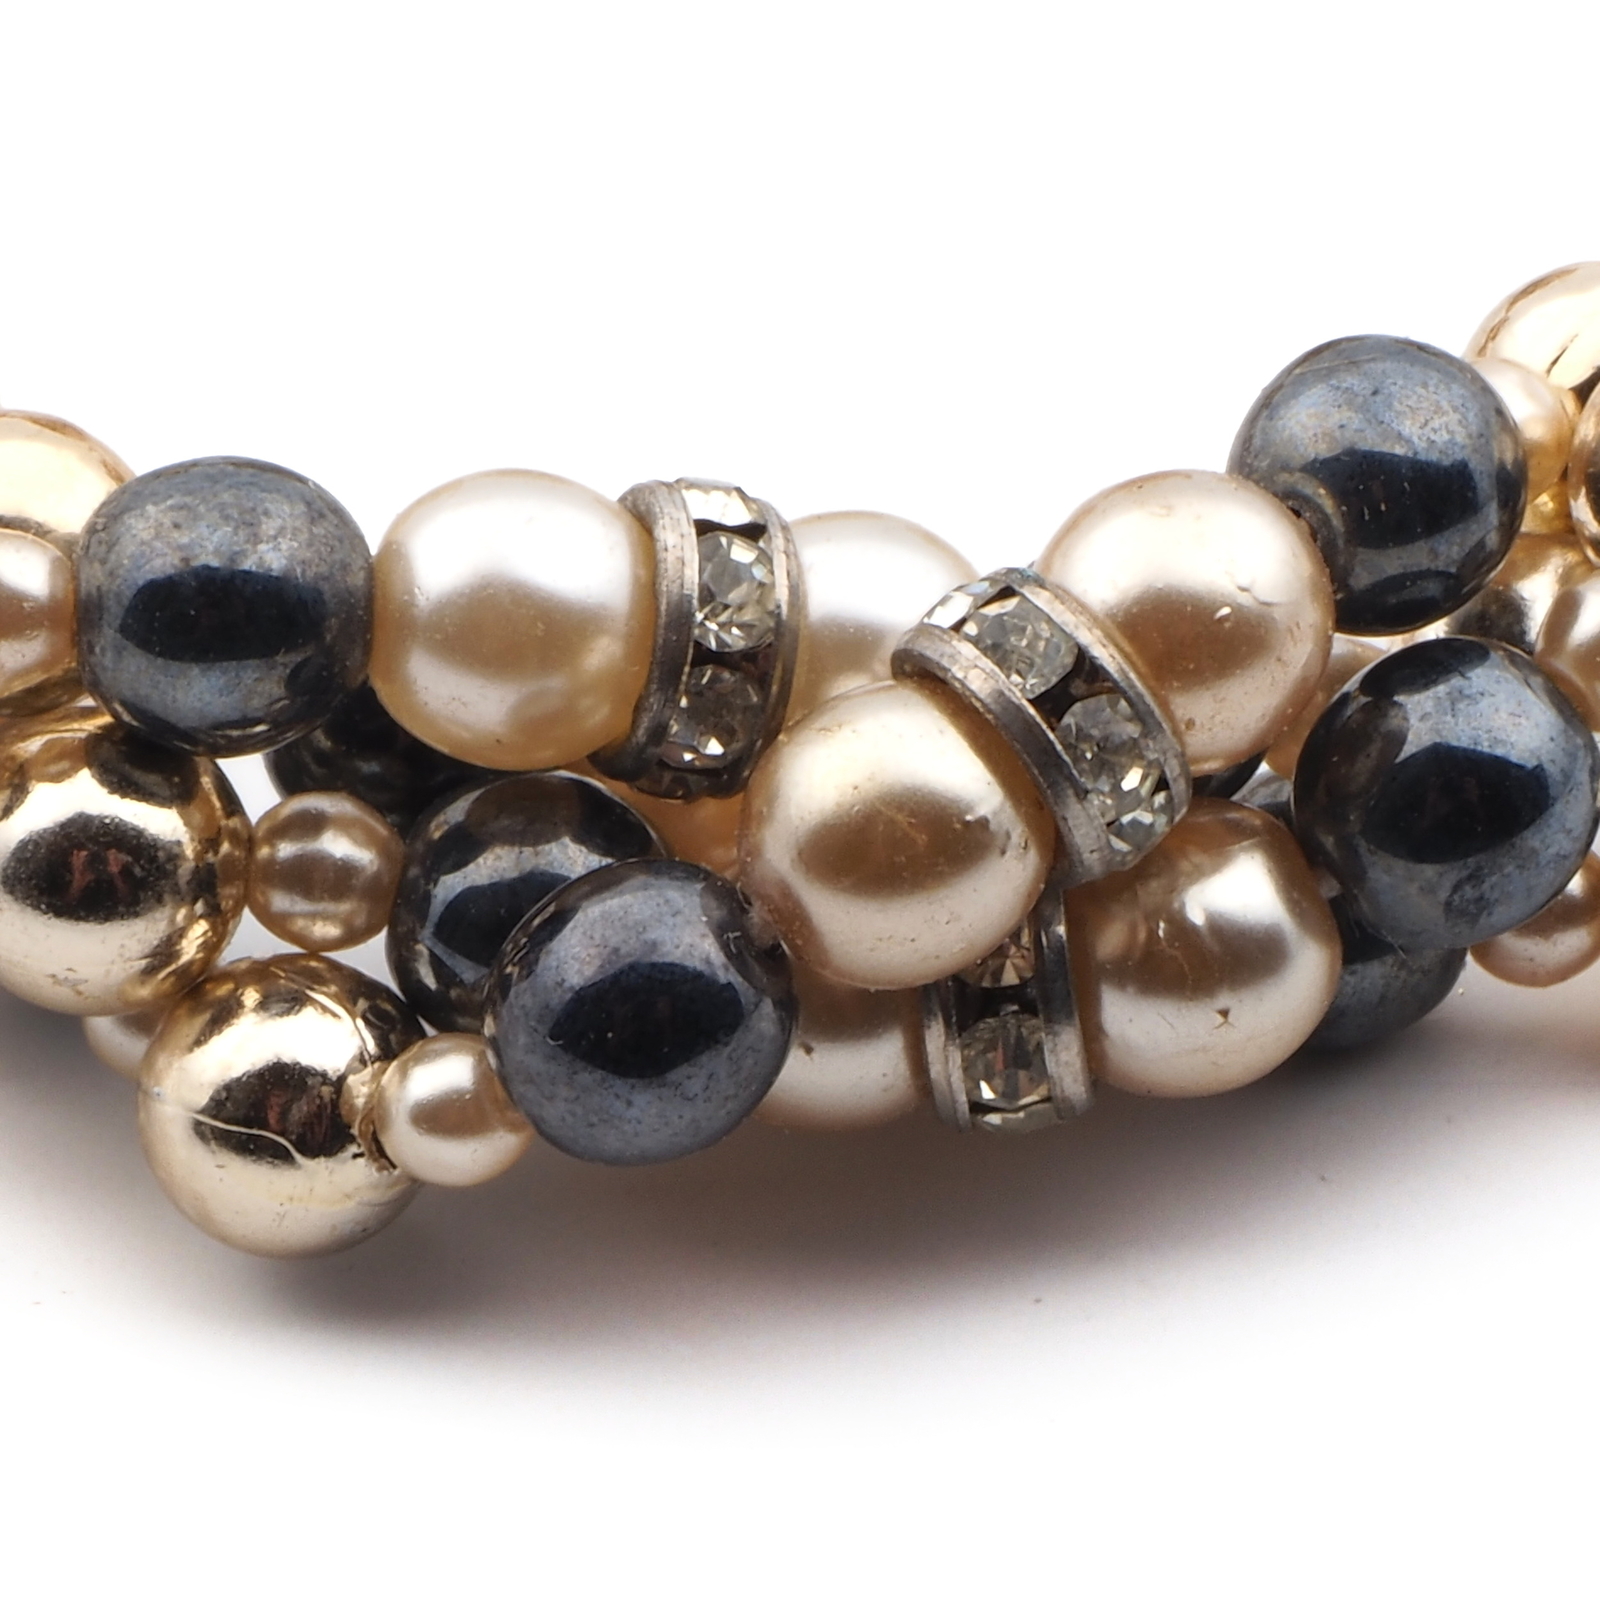 Antique Pearl Bracelet, Dated 1862, Natural Saltwater Pear… | Flickr